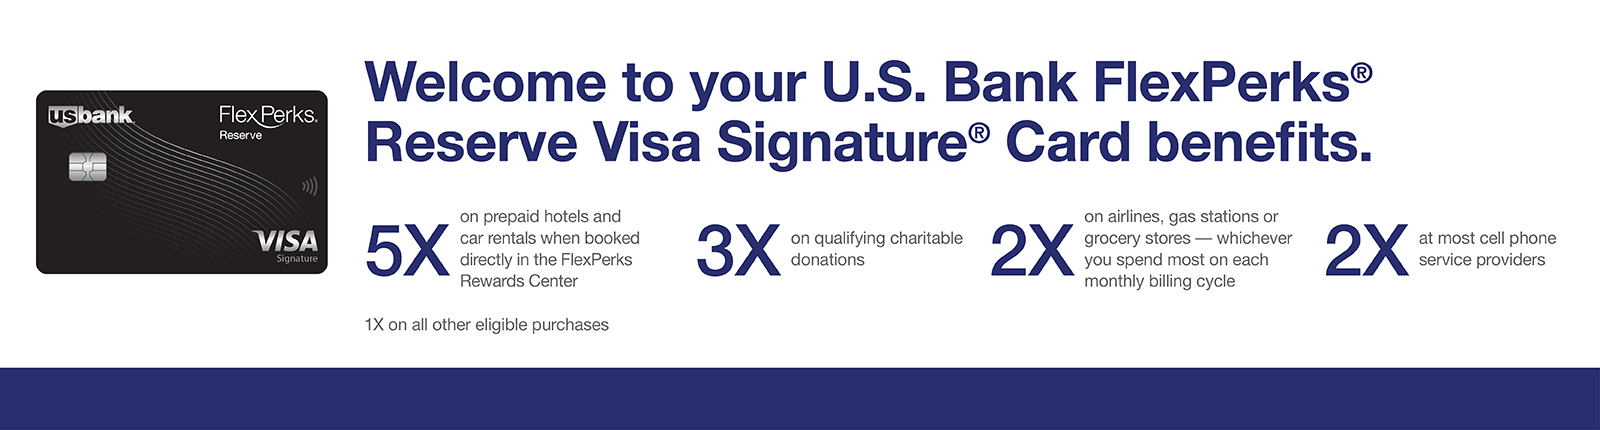 U.S. Bank FlexPerks® Reserve Visa Signature® Card benefits